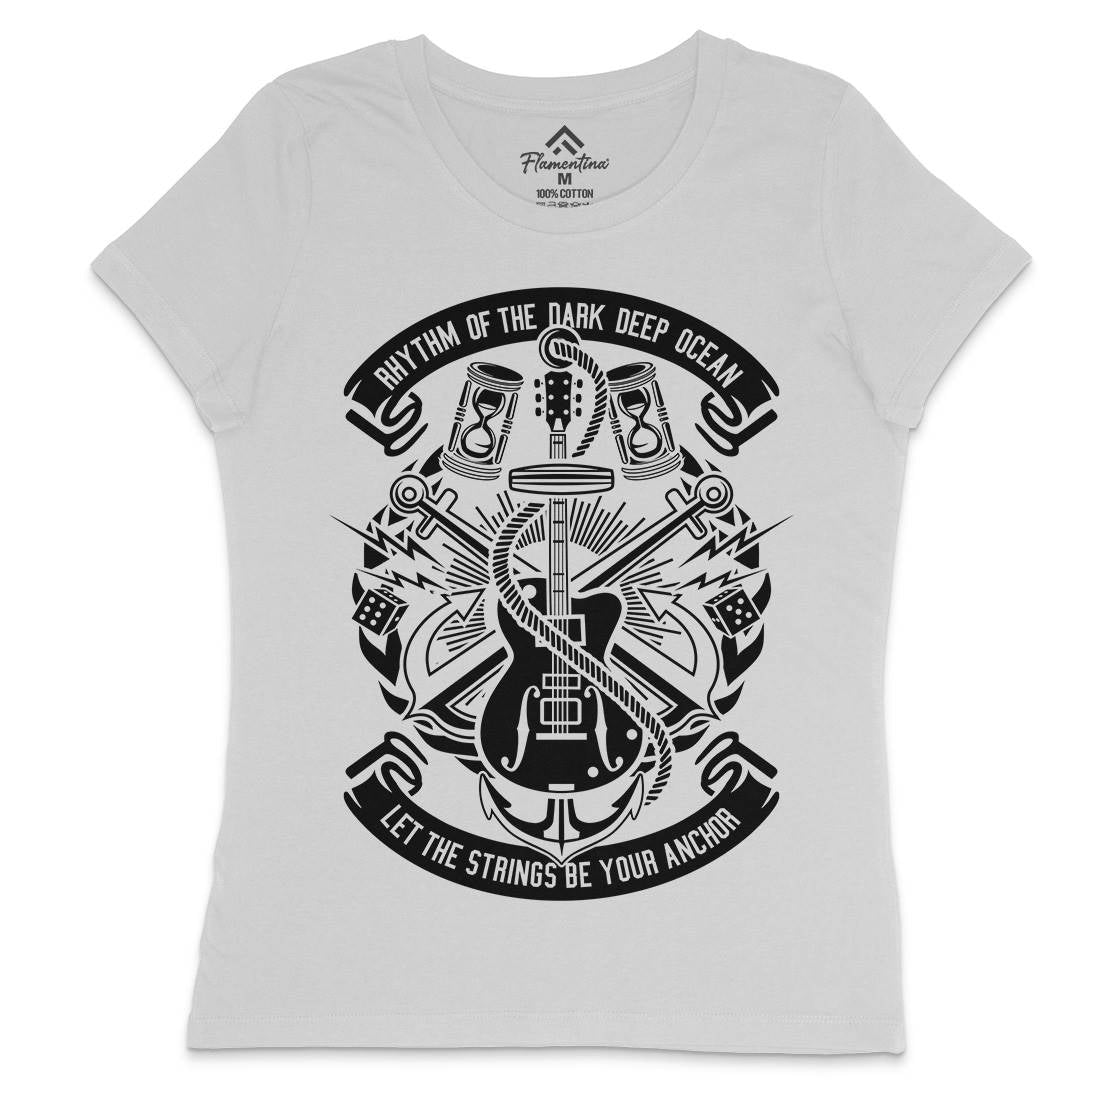 Rhythm Of Dark Ocean Womens Crew Neck T-Shirt Navy B611